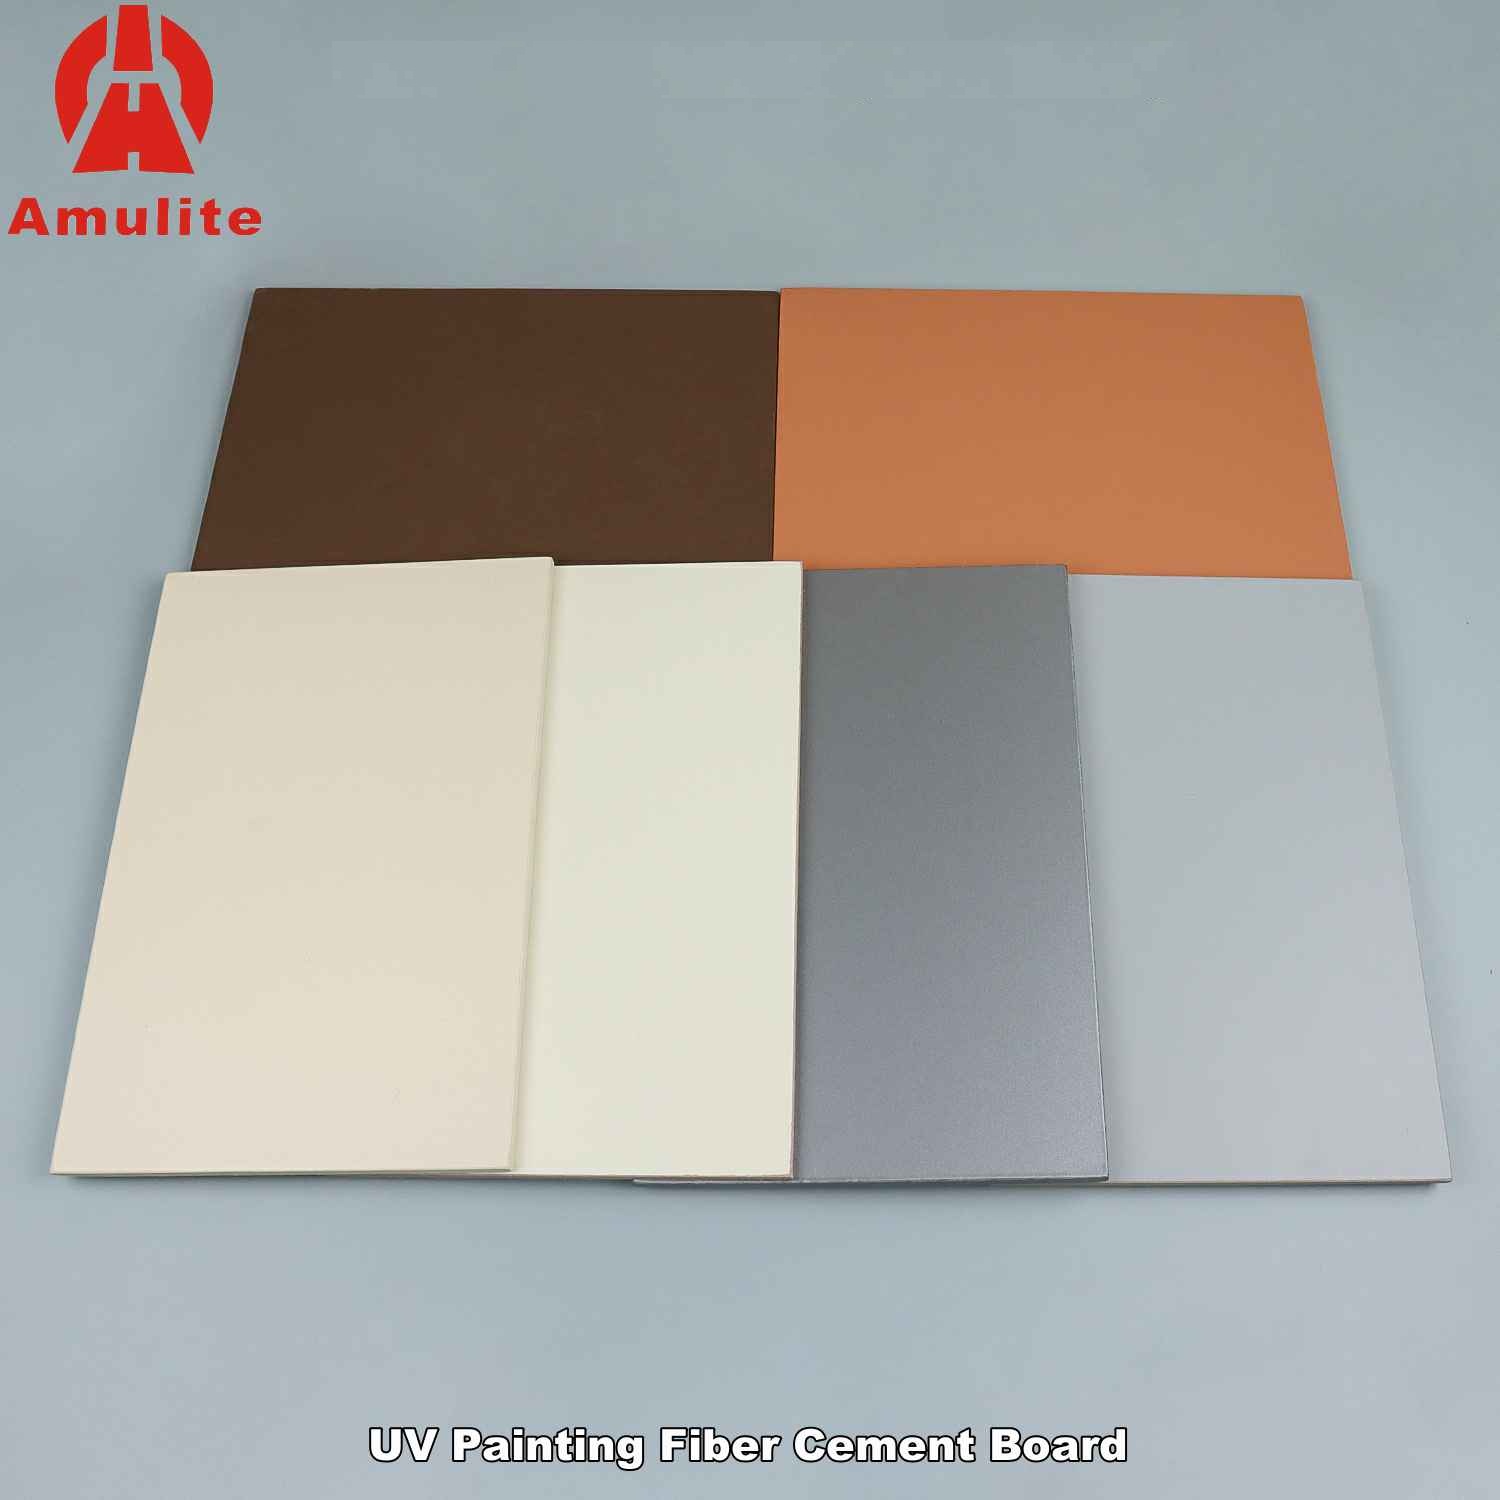 Amulite UV Painting Fiber Cement Board